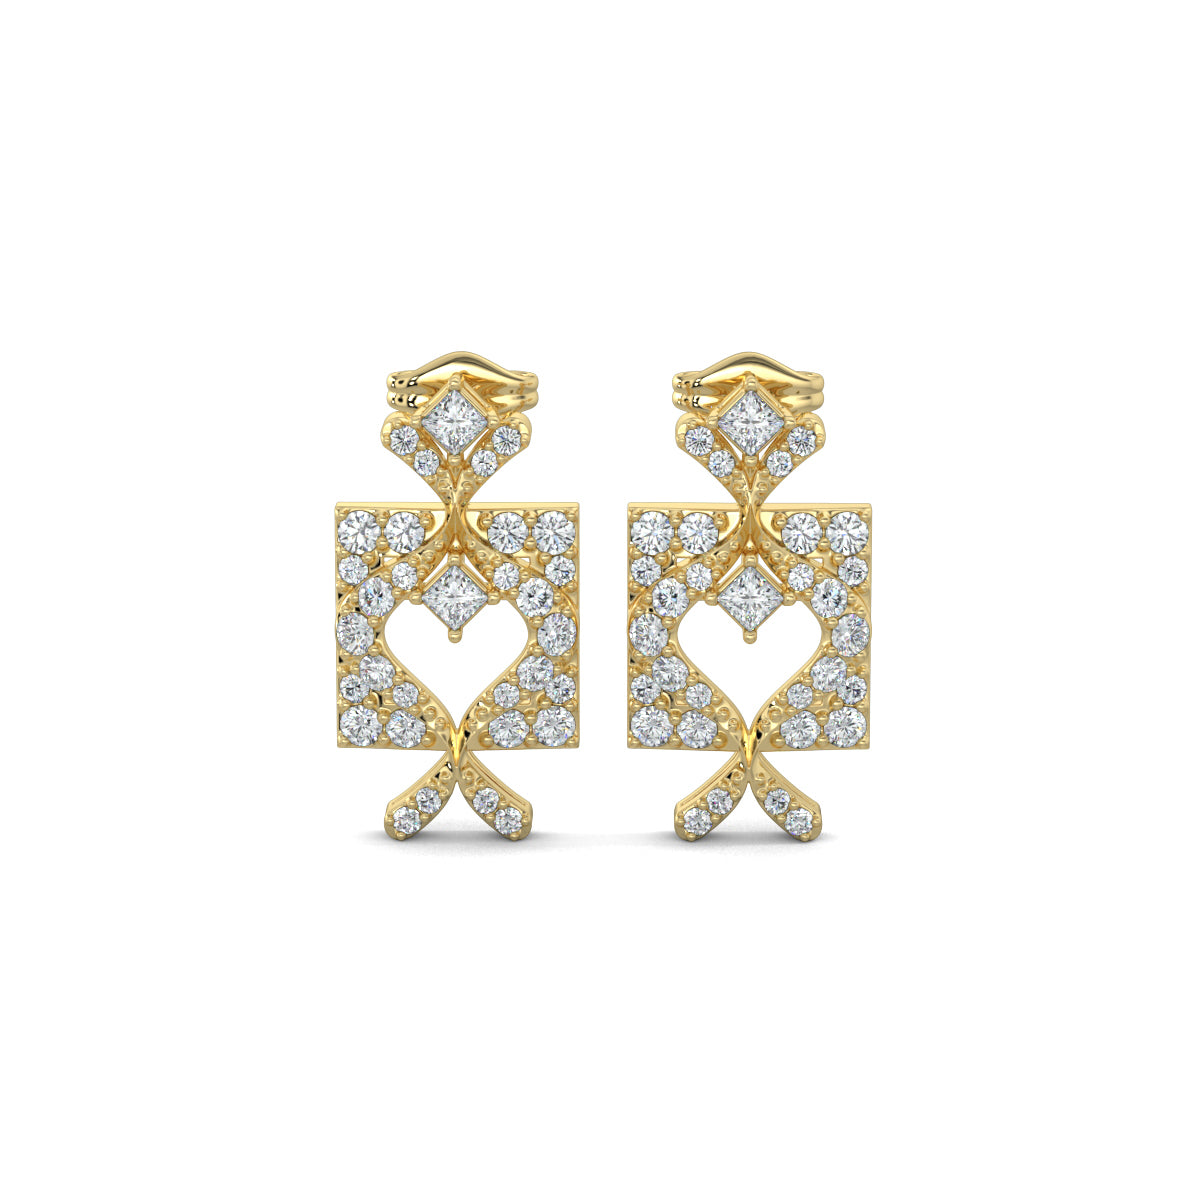 Yellow Gold, Diamond Earrings, Royal Pulse Earrings, Natural Diamonds, Lab-Grown Diamonds, Square Earrings, Heart Design, Princess Diamond, Mid-Length Earrings, Sophistication, Grace, Jewelry